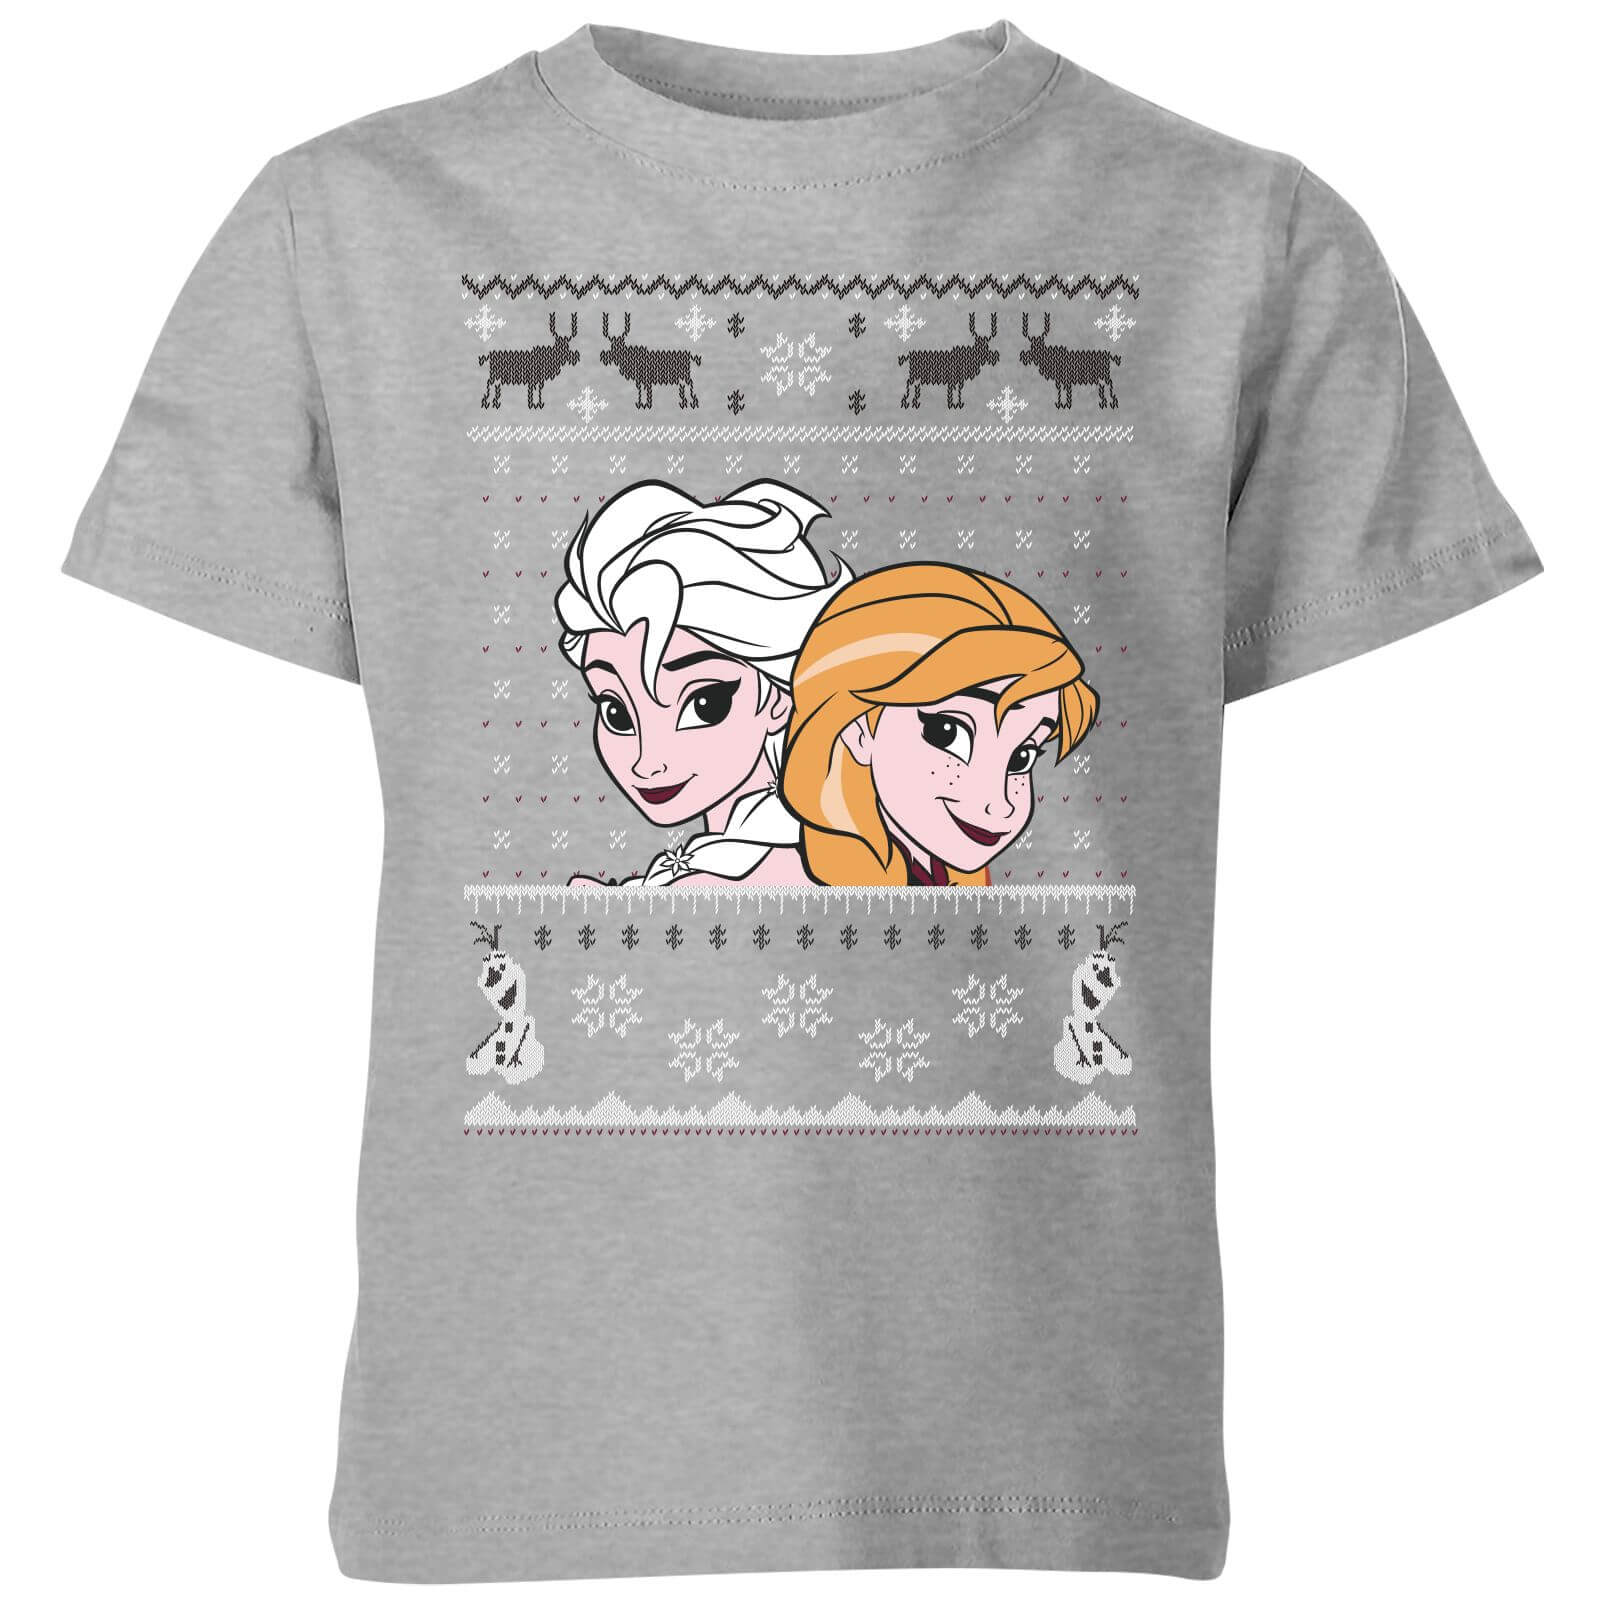 Disney Frozen Elsa and Anna Kids' Christmas T-Shirt - Grey - 3-4 Years - Grey